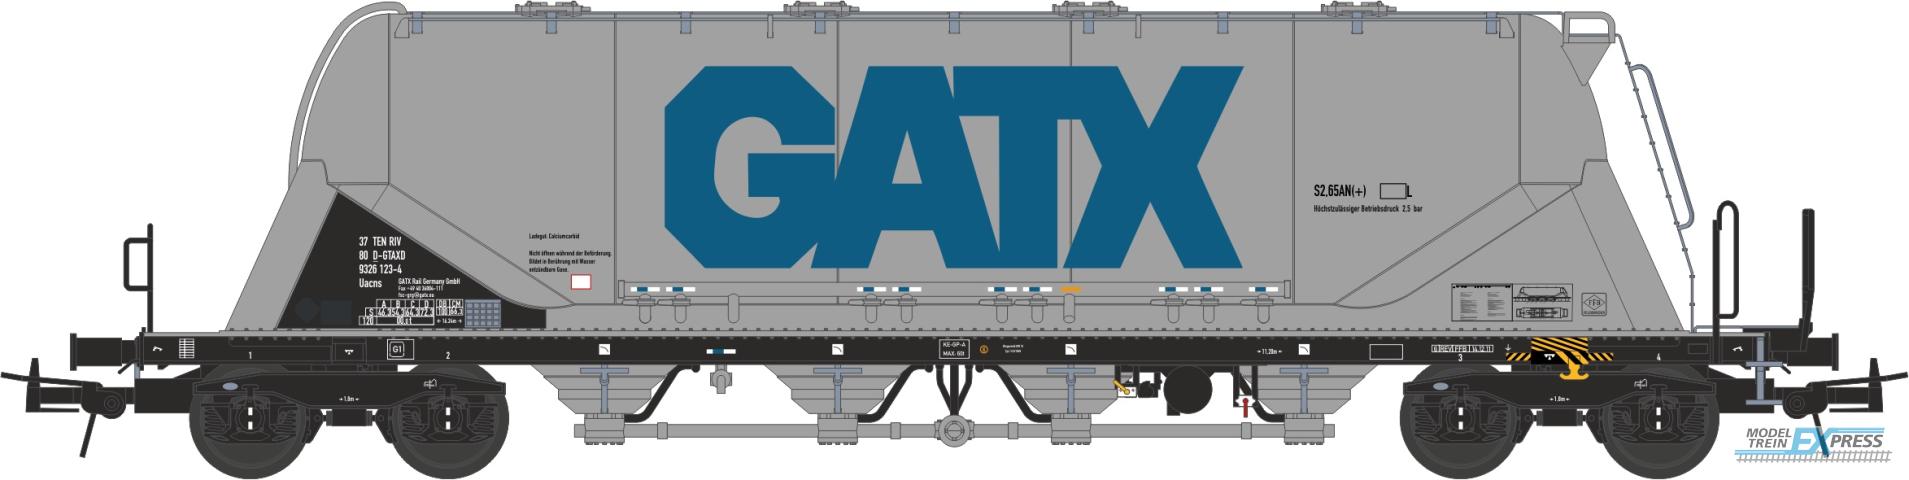 NME 503719 Zementsilowagen Uacns "GATX", großes Logo, silber, Ep. 6